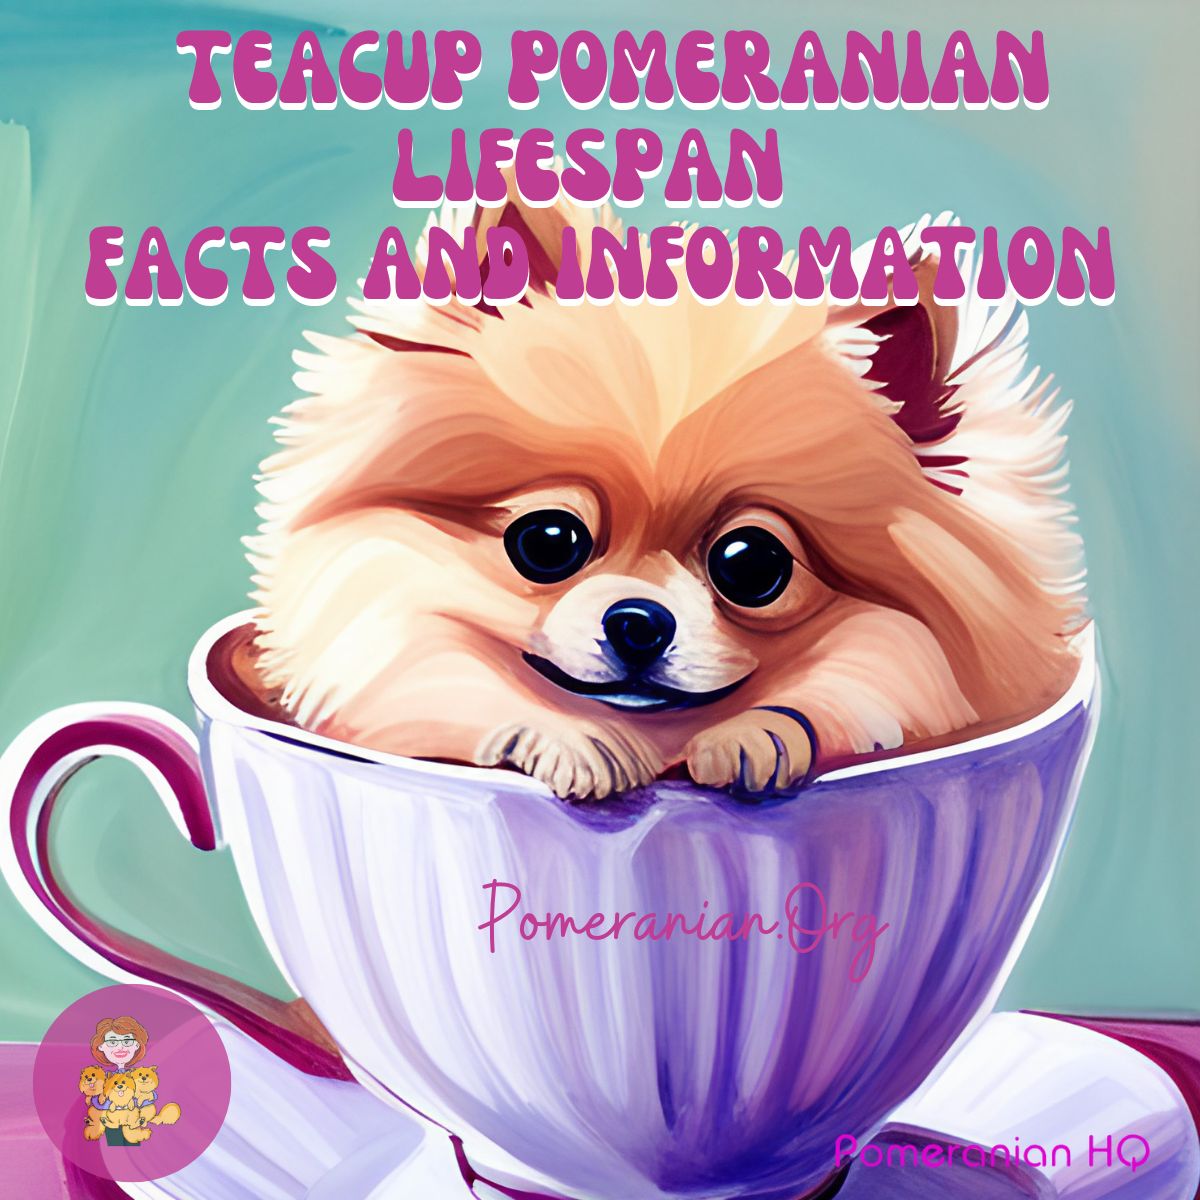 Teacup Pomeranian LifeSpan Facts and Information